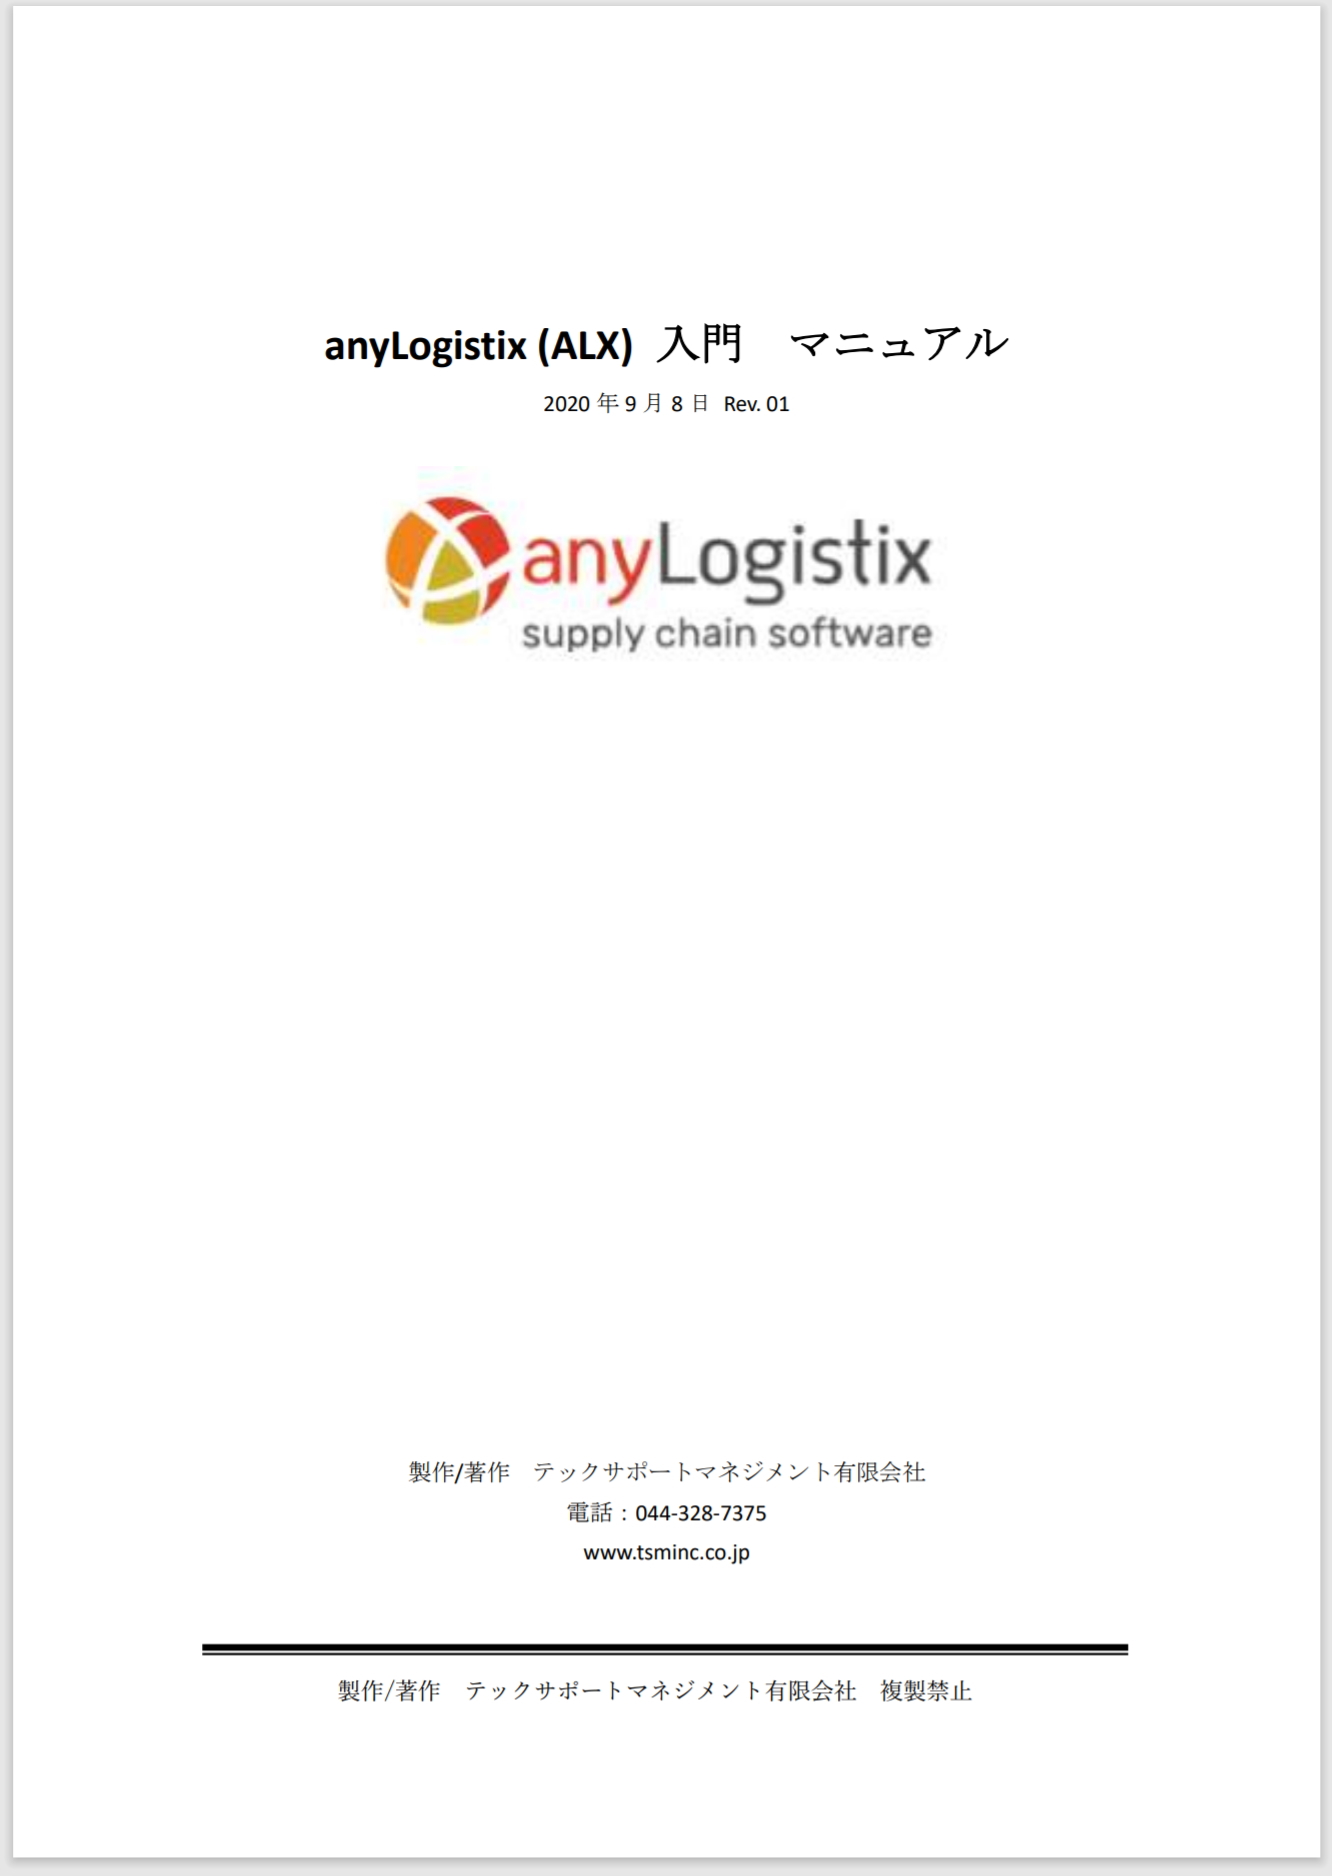 anyLogistix入門マニュアルダウンロード